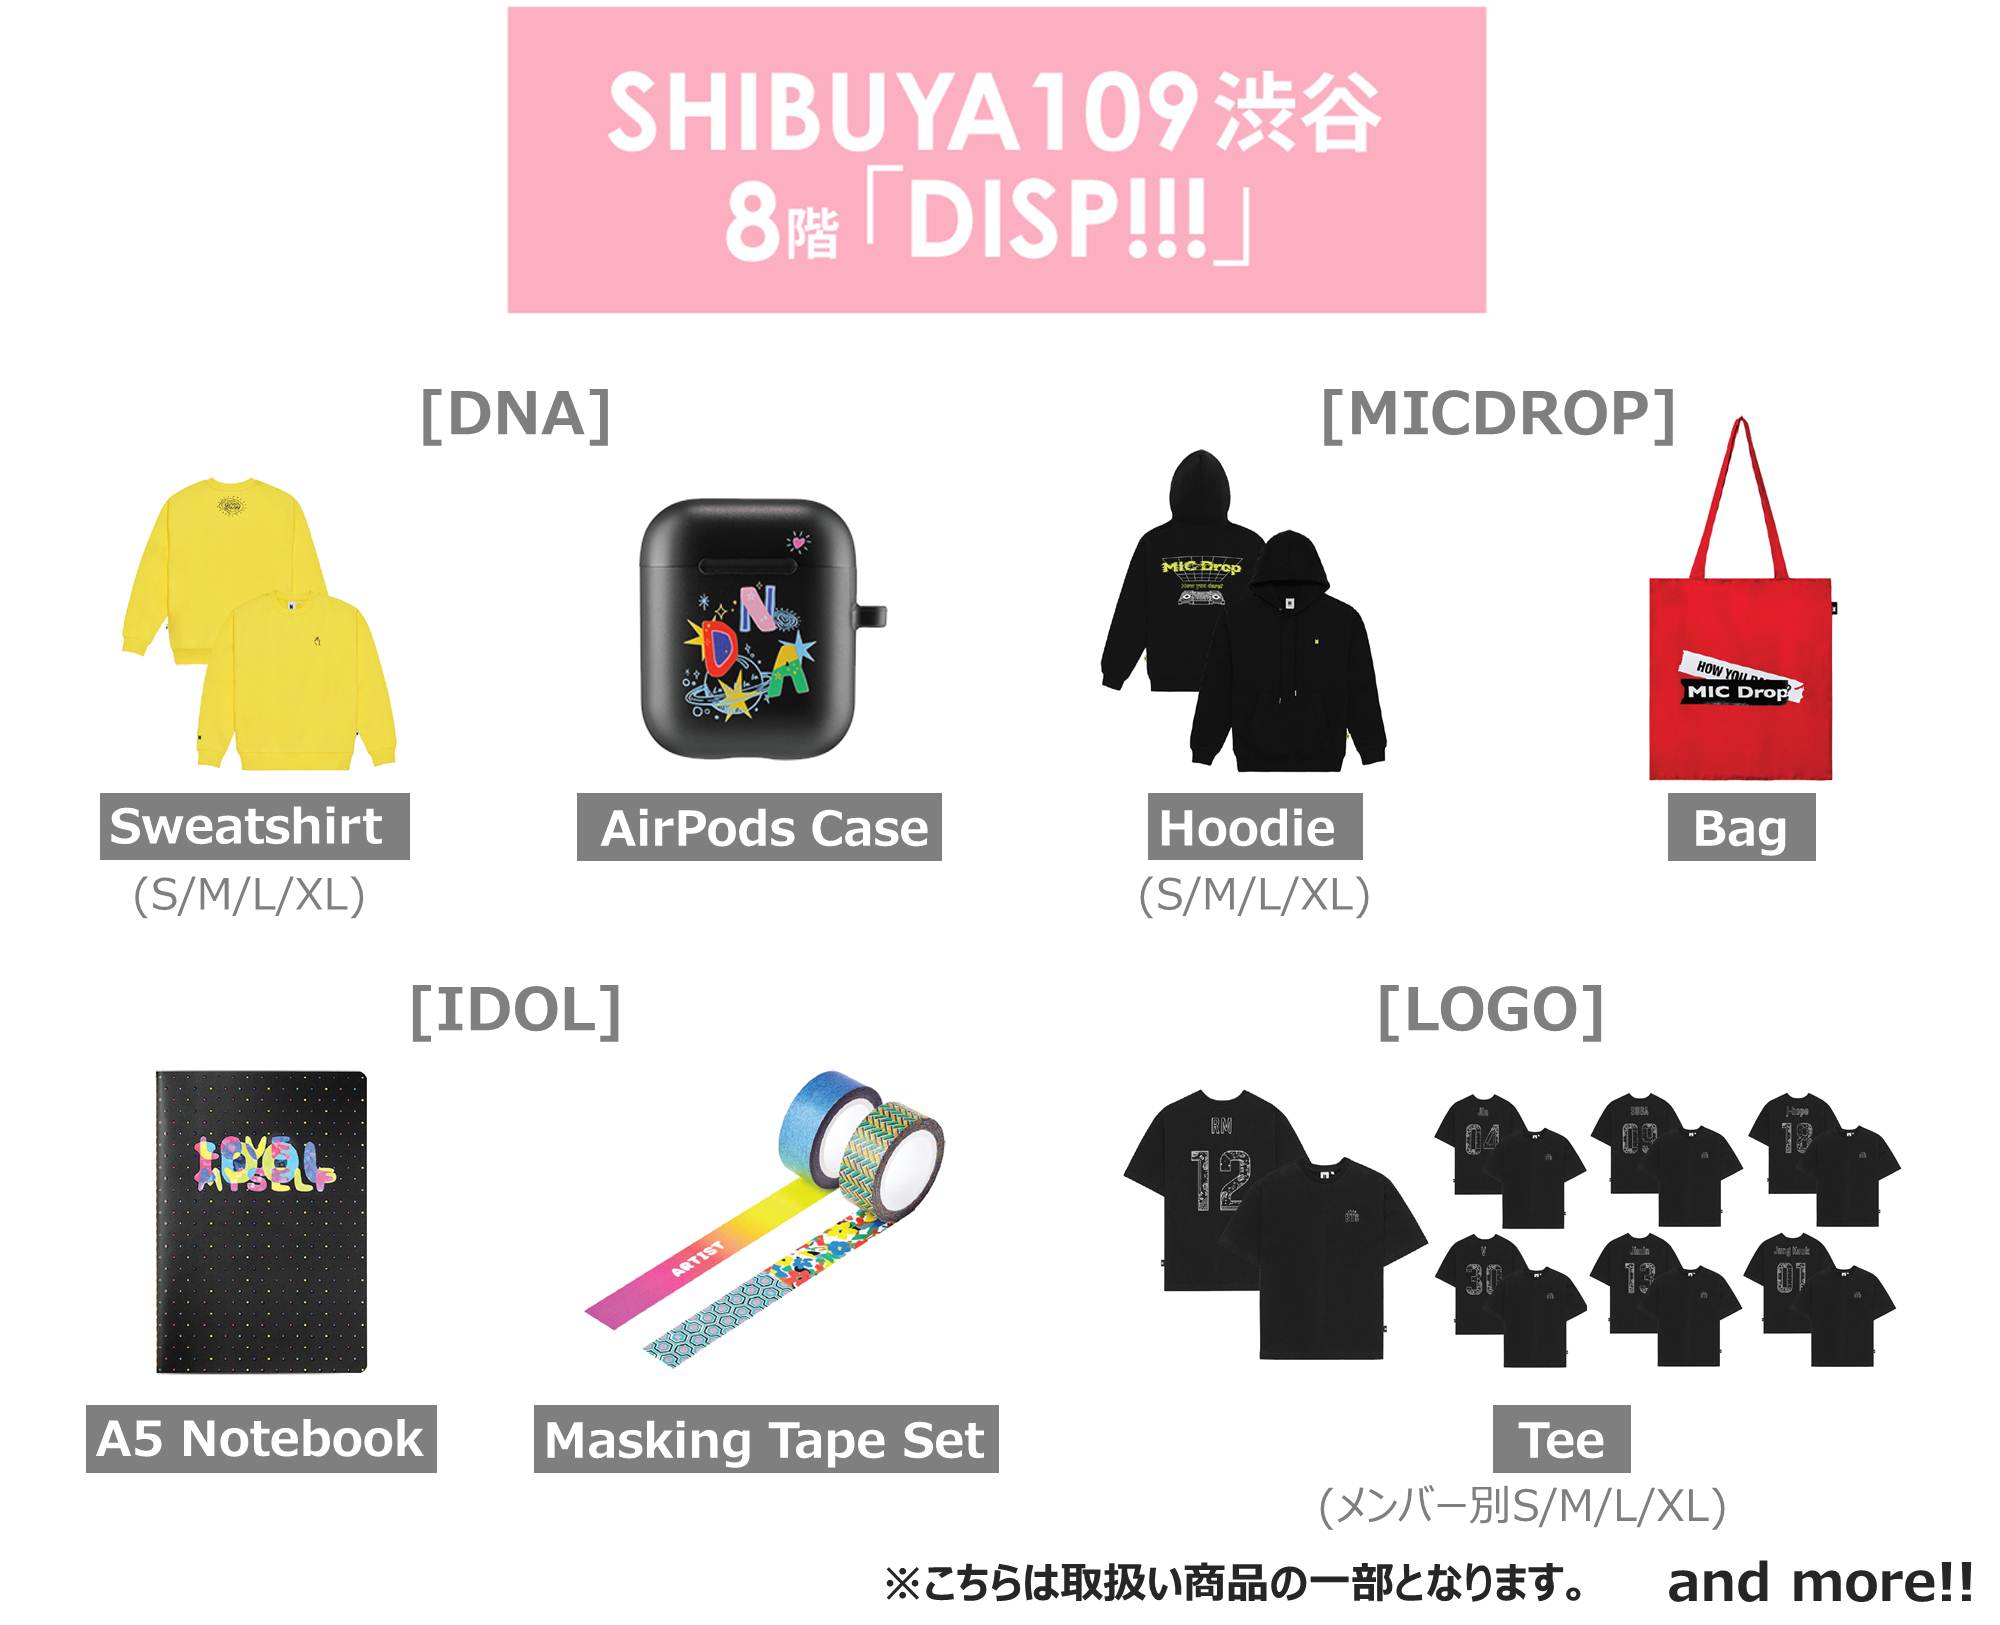 BTS ポップアップストア in SHIBUYA109 4店舗 11.23-12.29 コラボ開催!